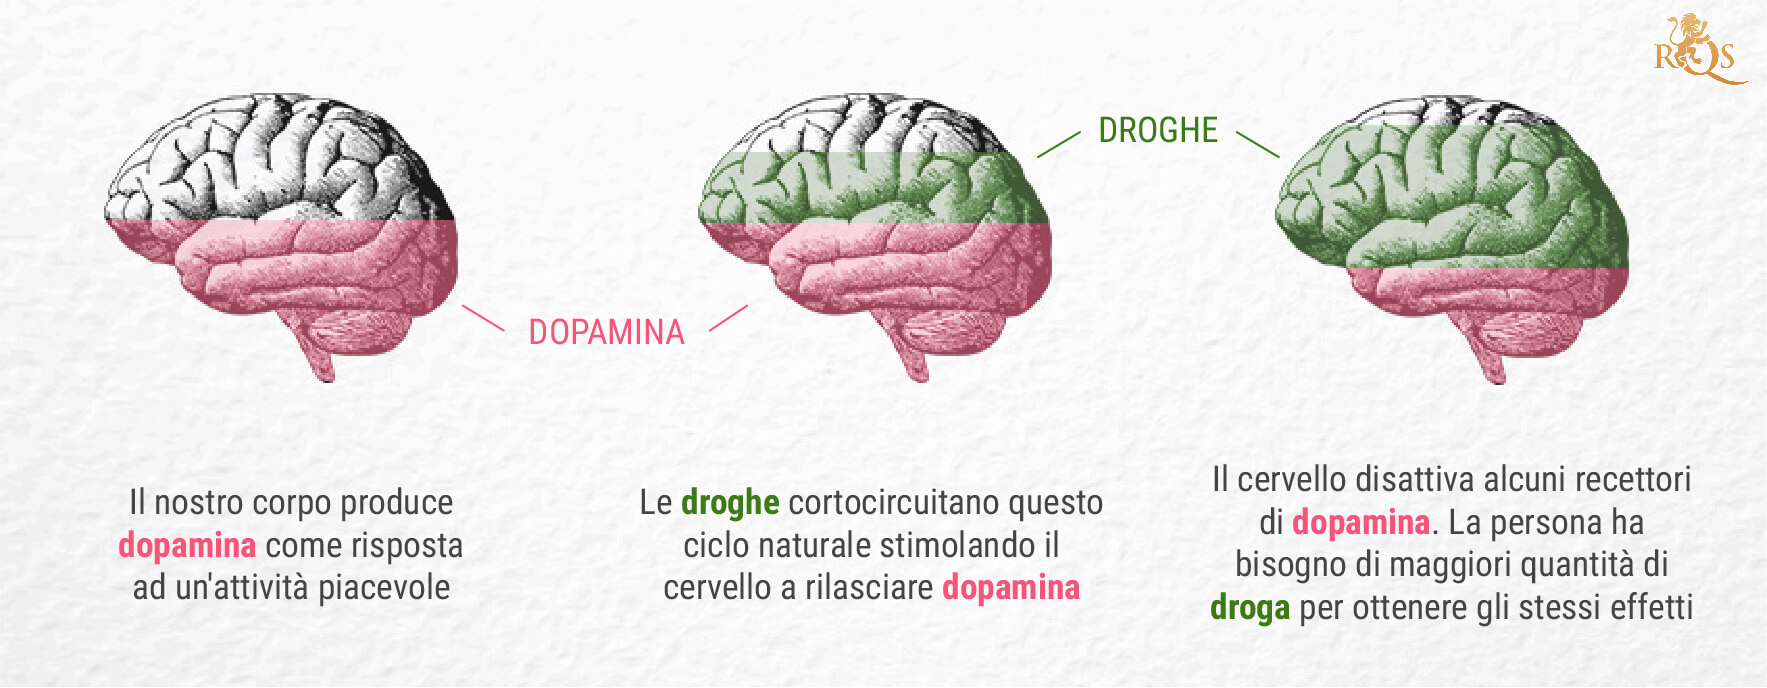 Qual è il legame tra marijuana e dopamina?